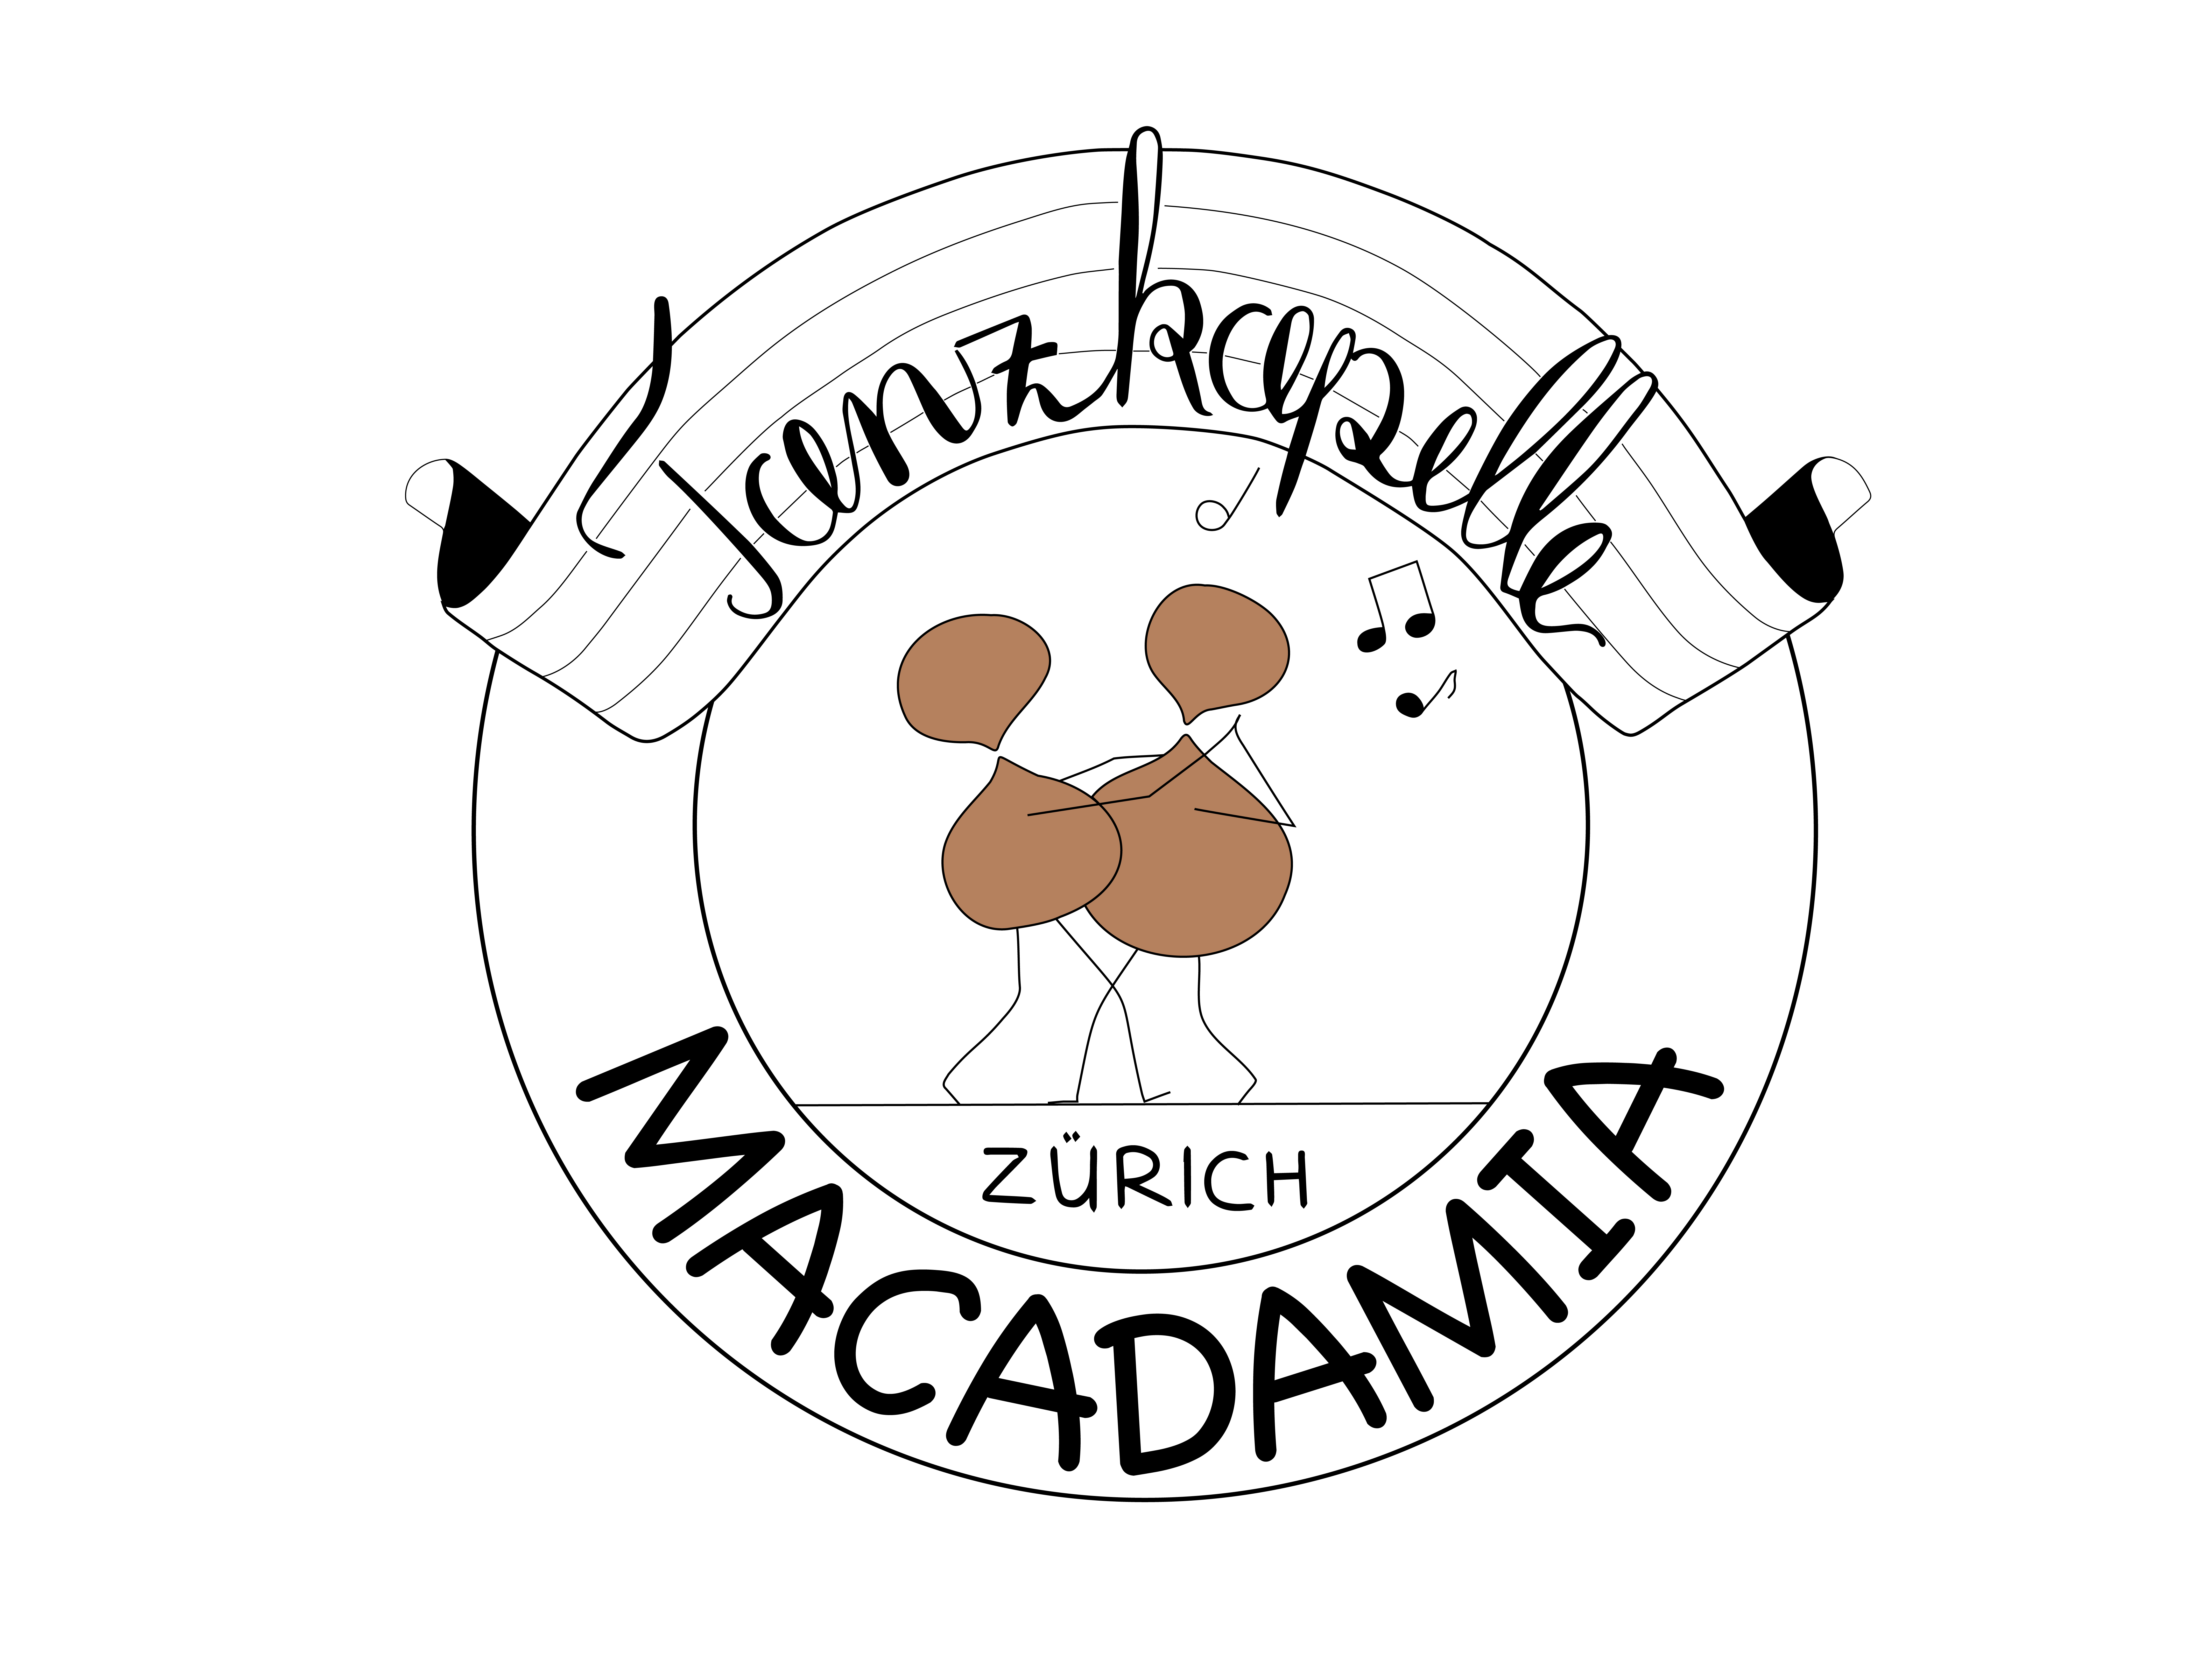 Macadamia Logo